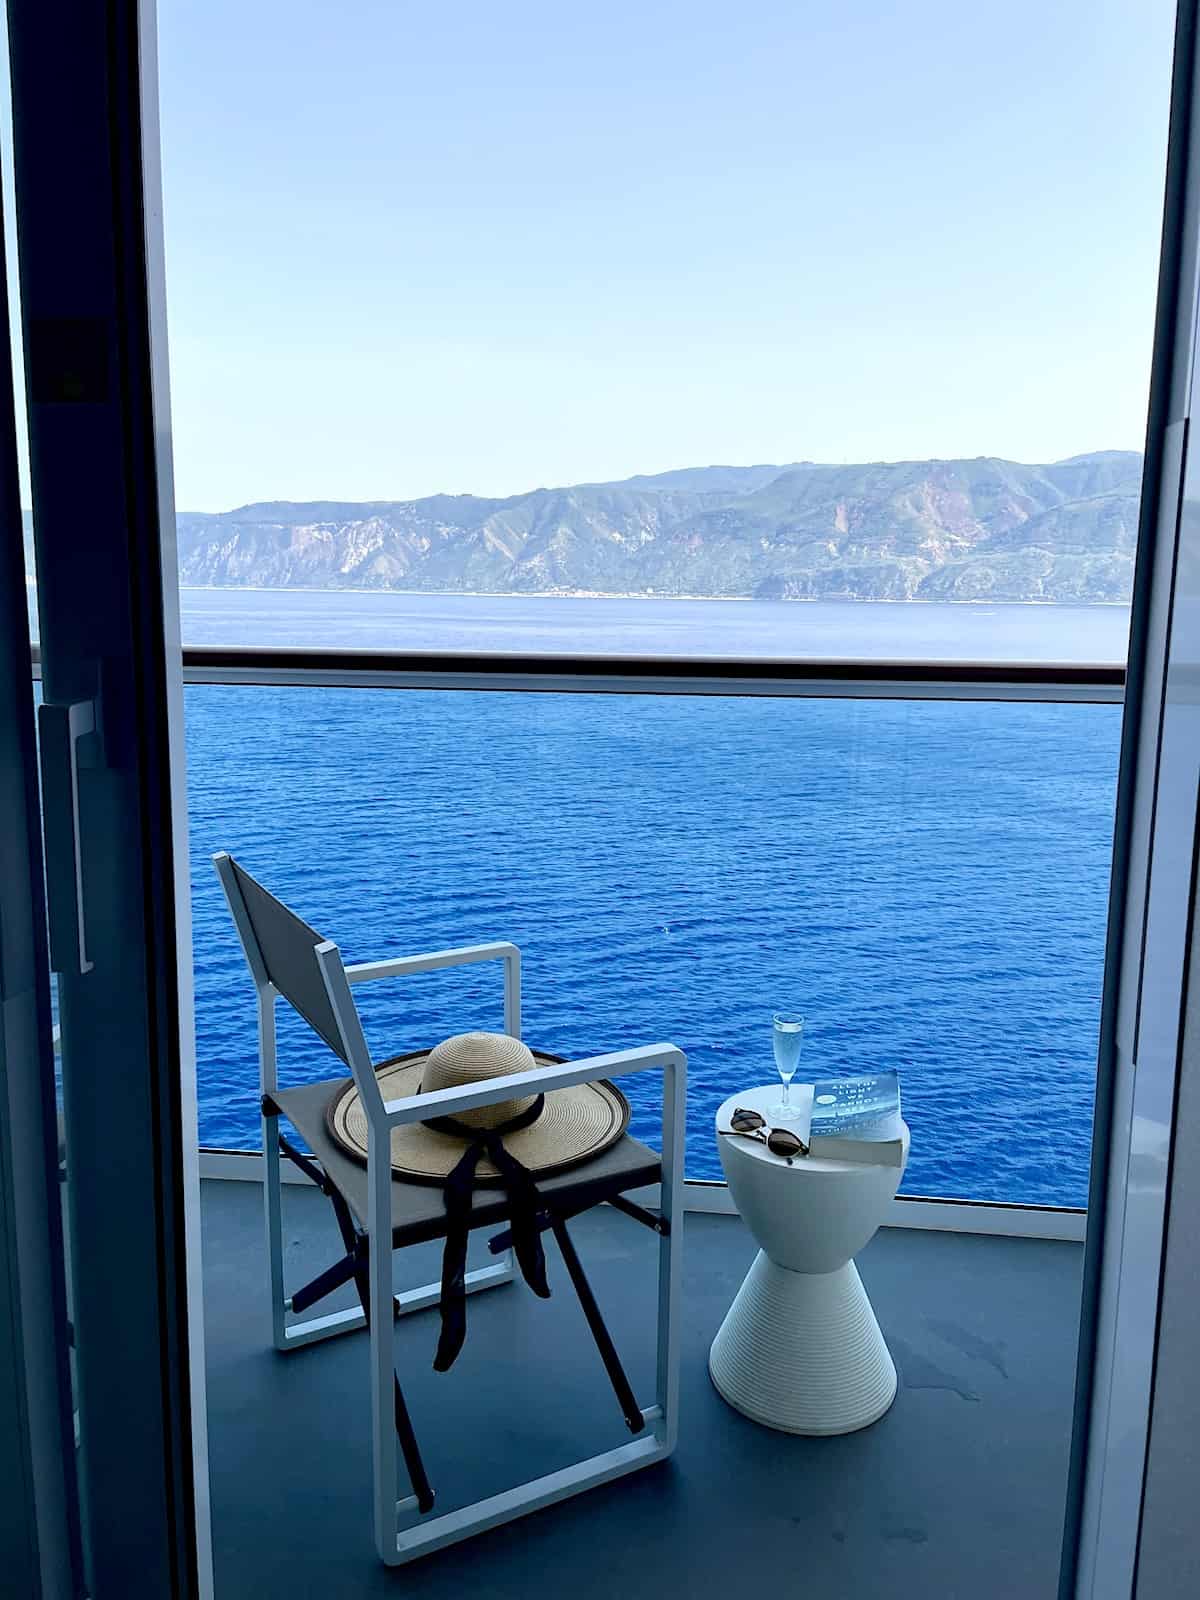 View from balcony on Costa Smeralda.